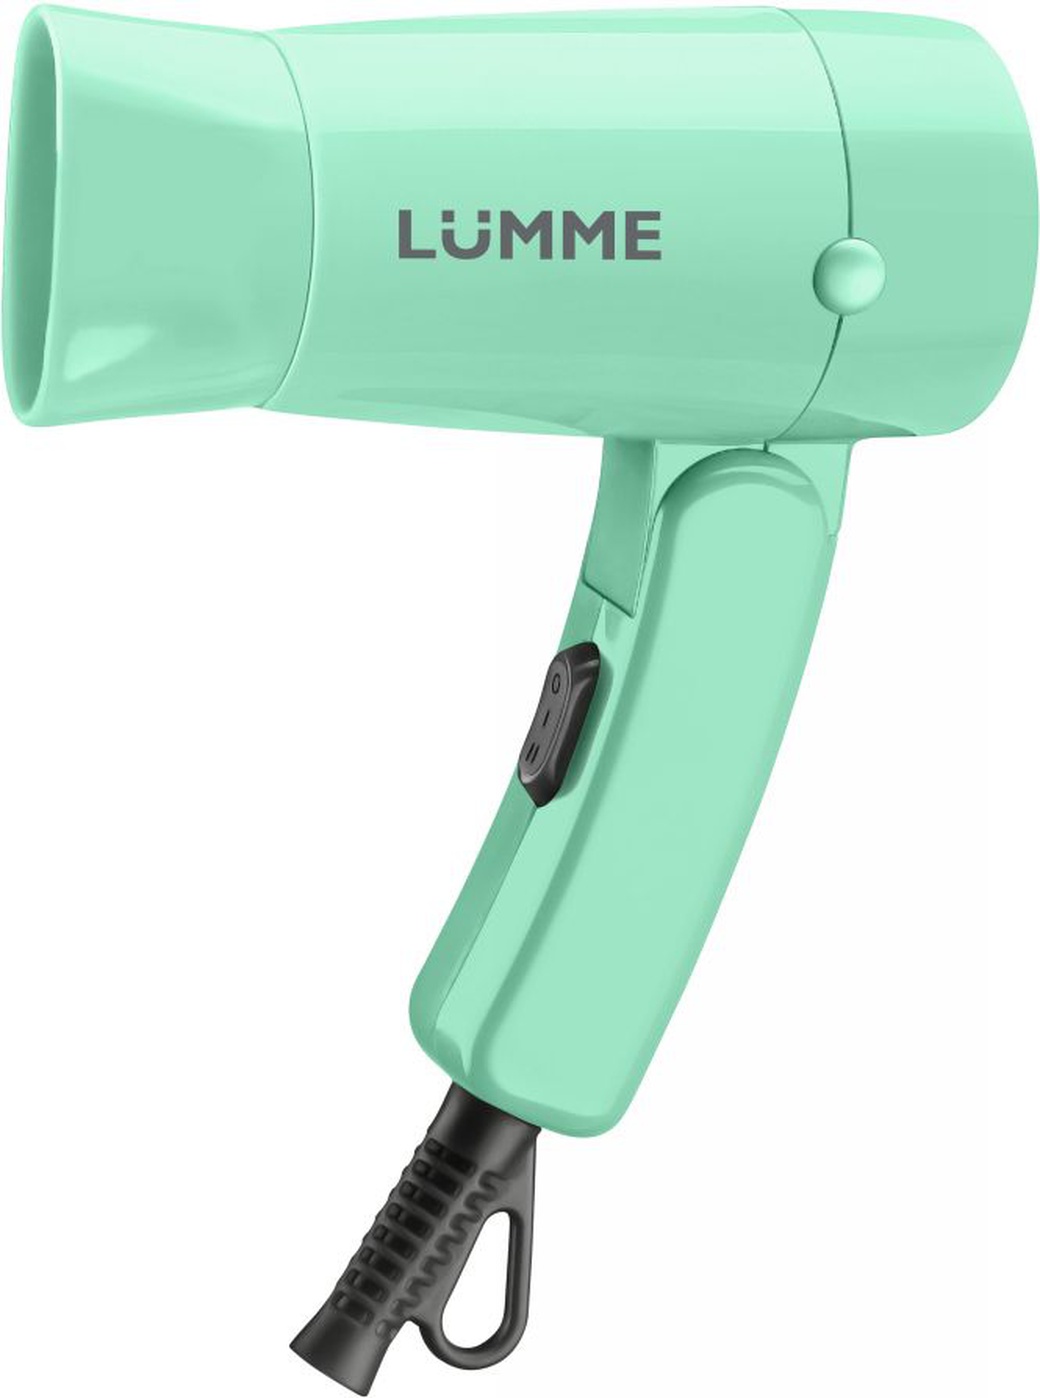 Фен LUMME LU-1056 зеленый нефрит фото